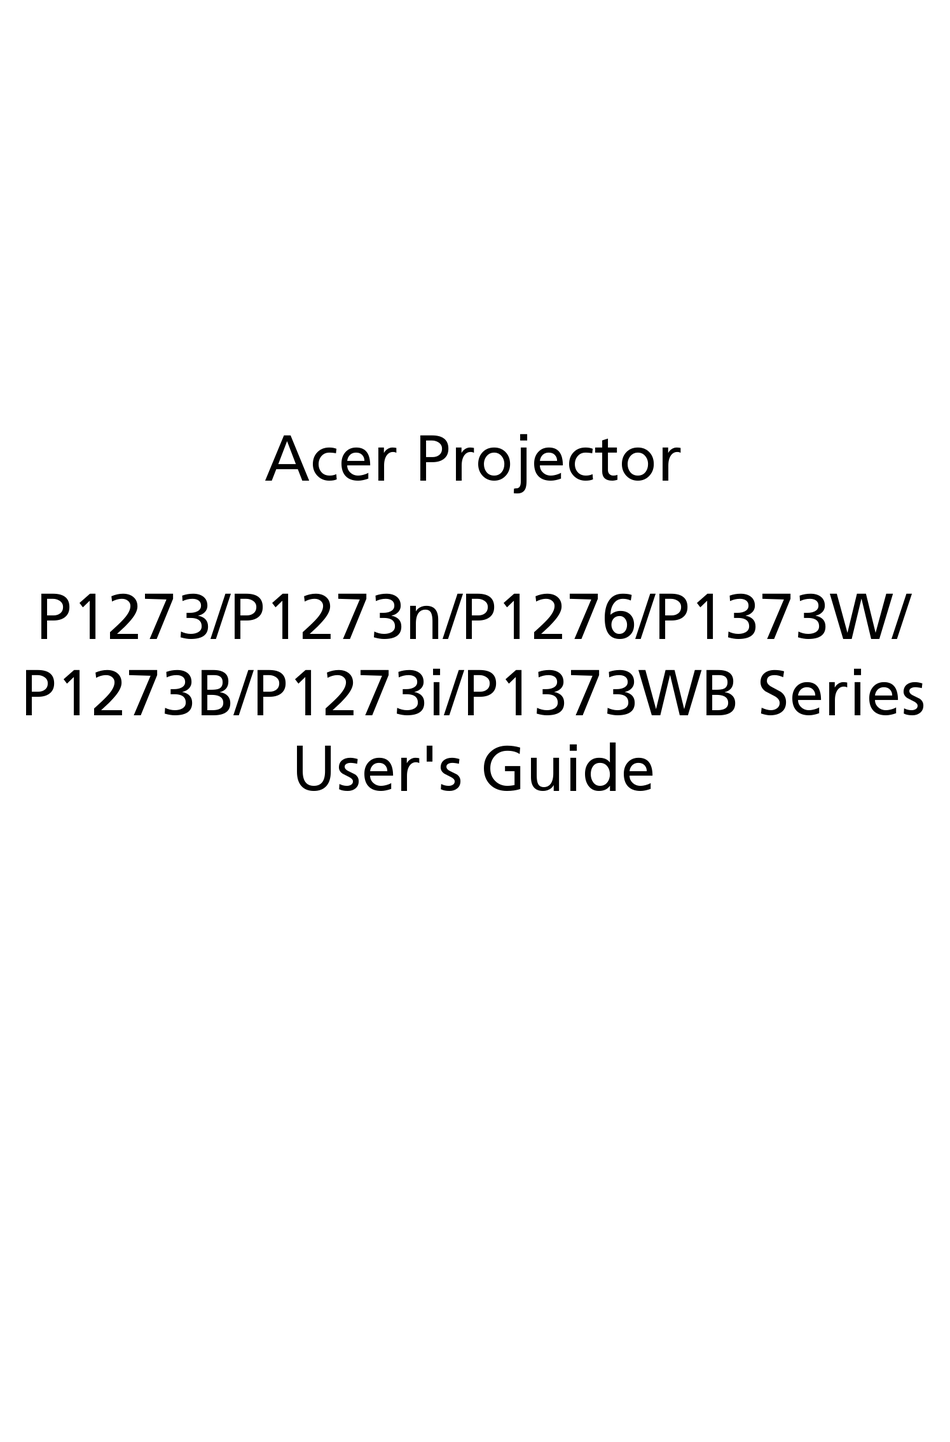 ACER P1273 SERIES USER MANUAL Pdf Download | ManualsLib